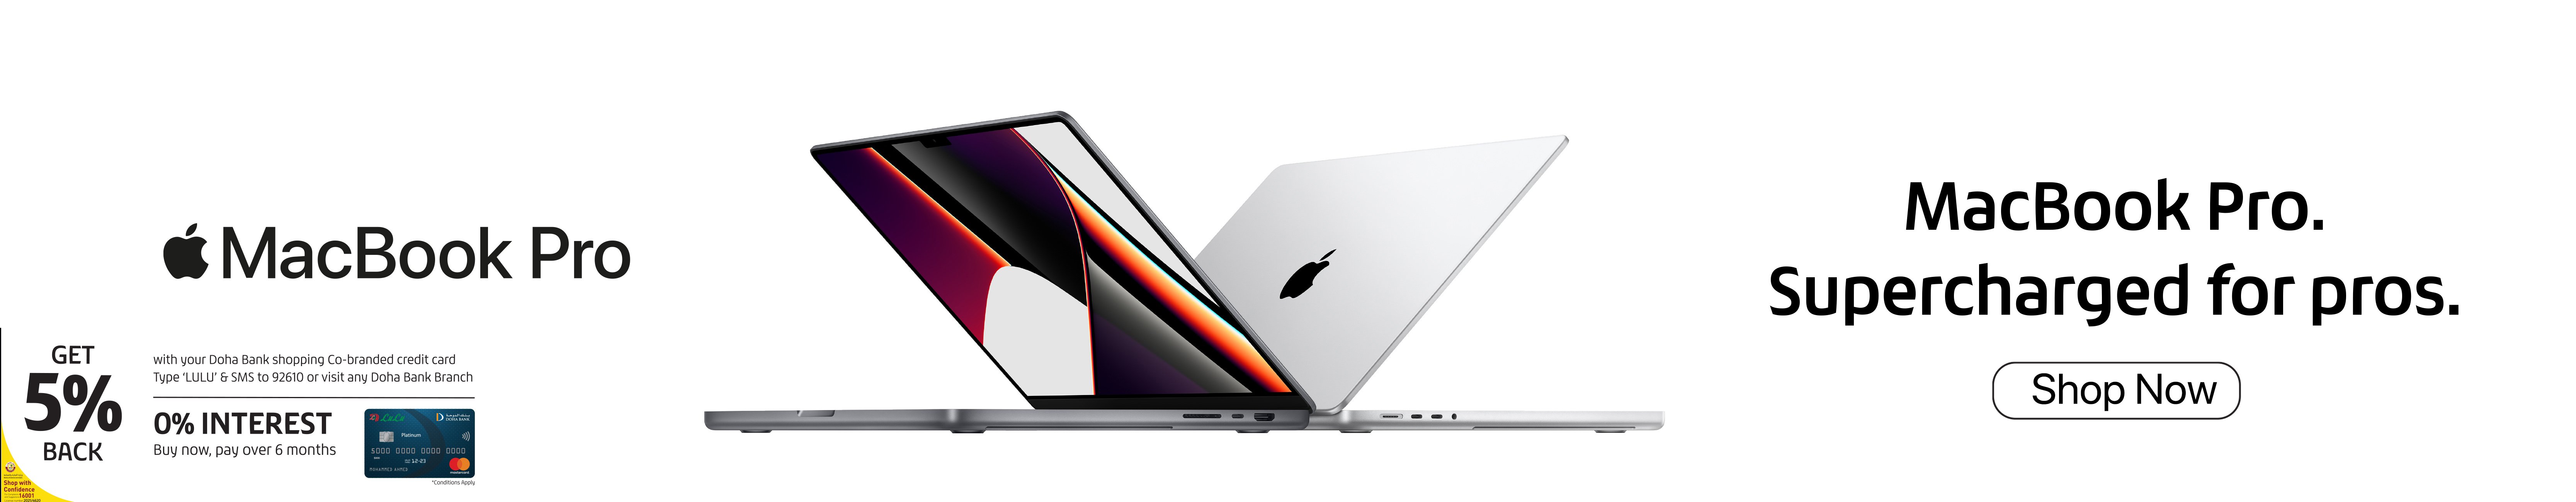 Web-MacBookPro2021-OGCC.jpg